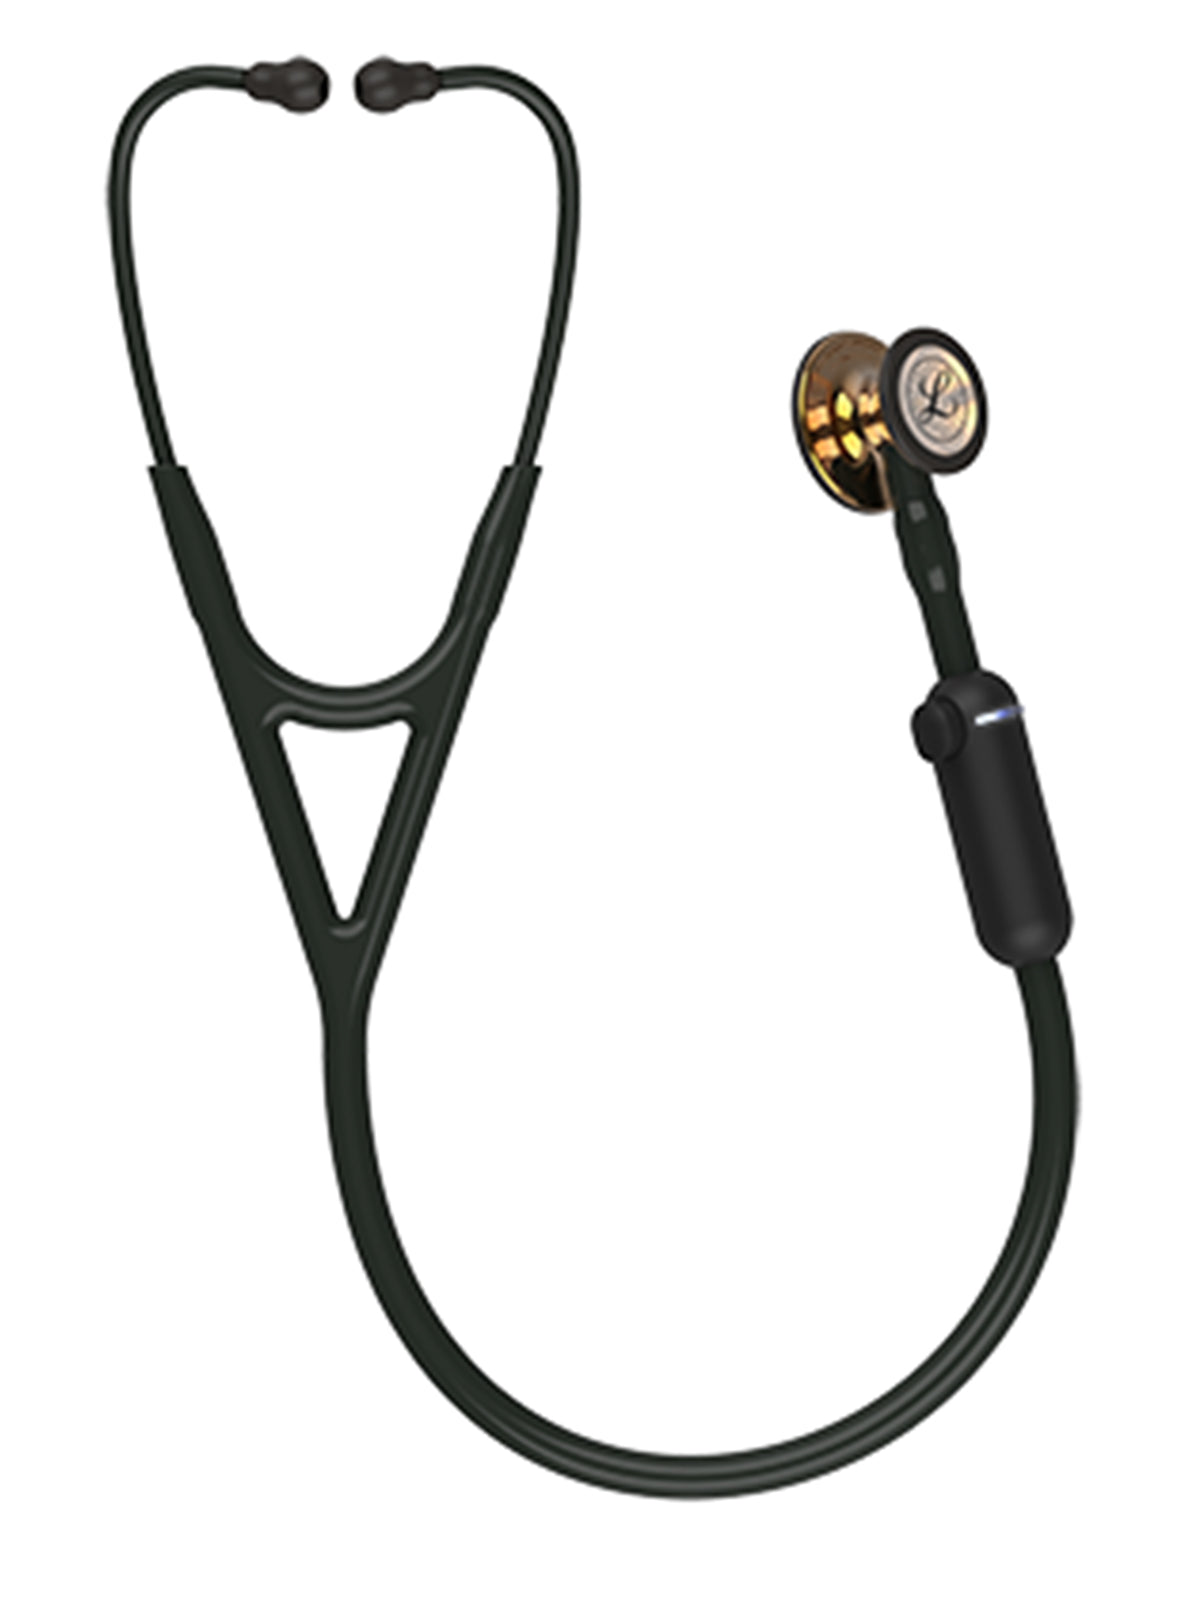 Digital Stethoscope